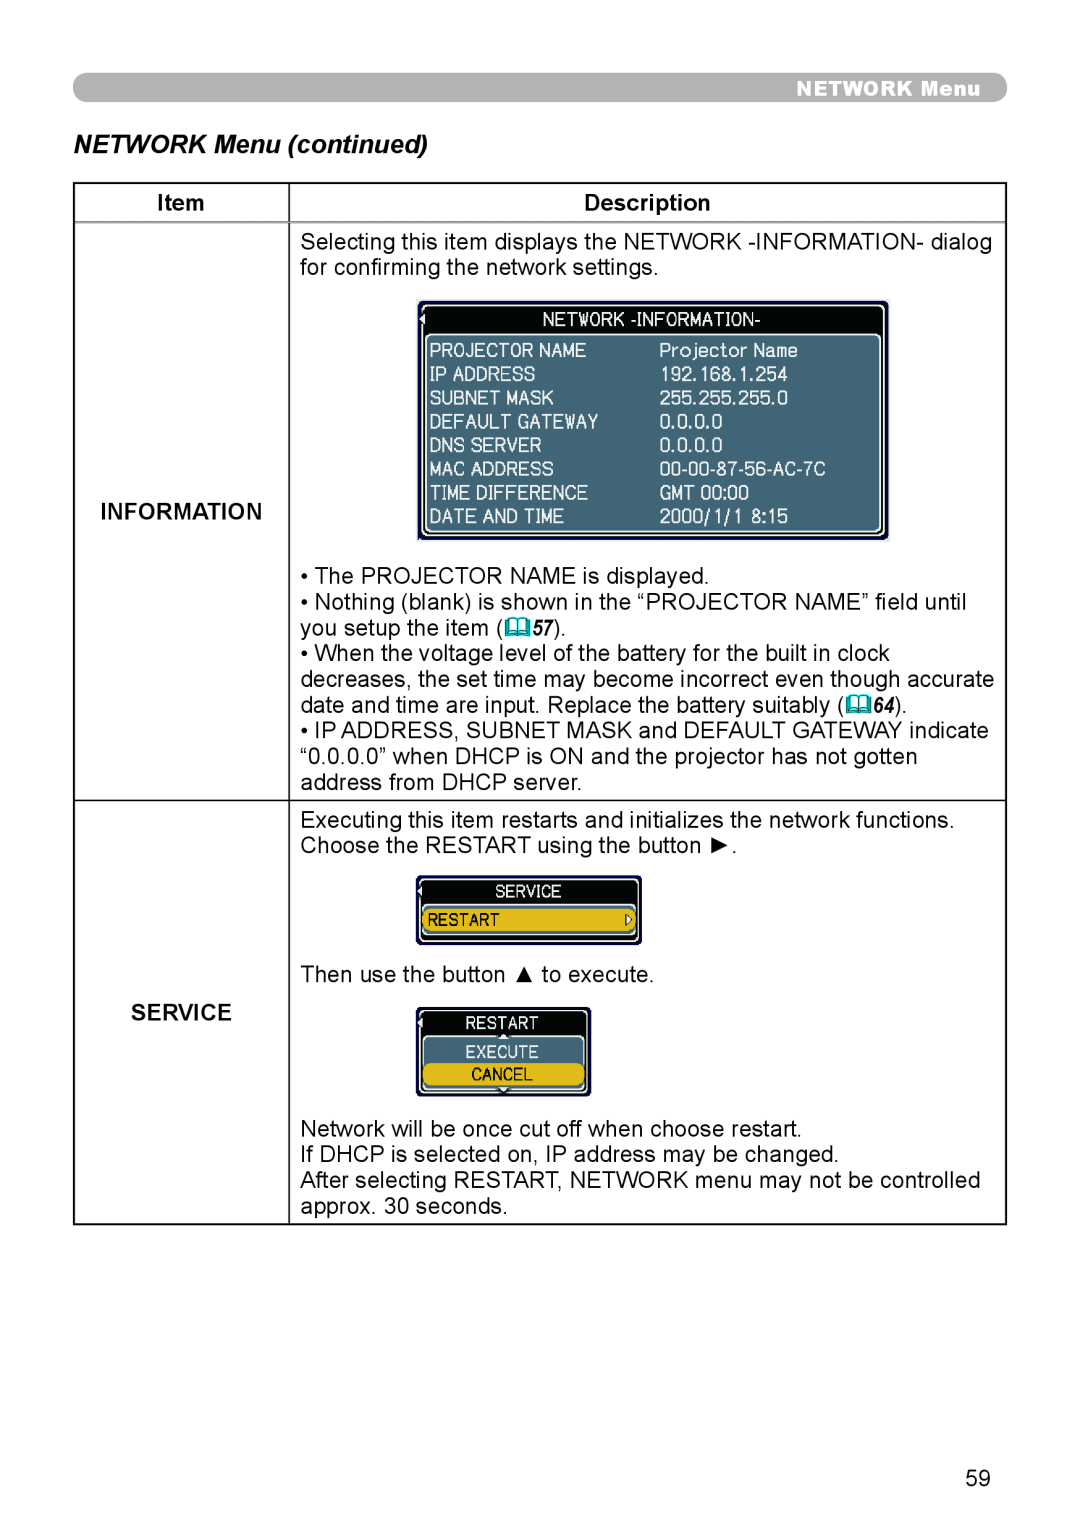 Planar PR9020 user manual NETWORK Menu continued, Description, Information, The PROJECTOR NAME is displayed, Service 